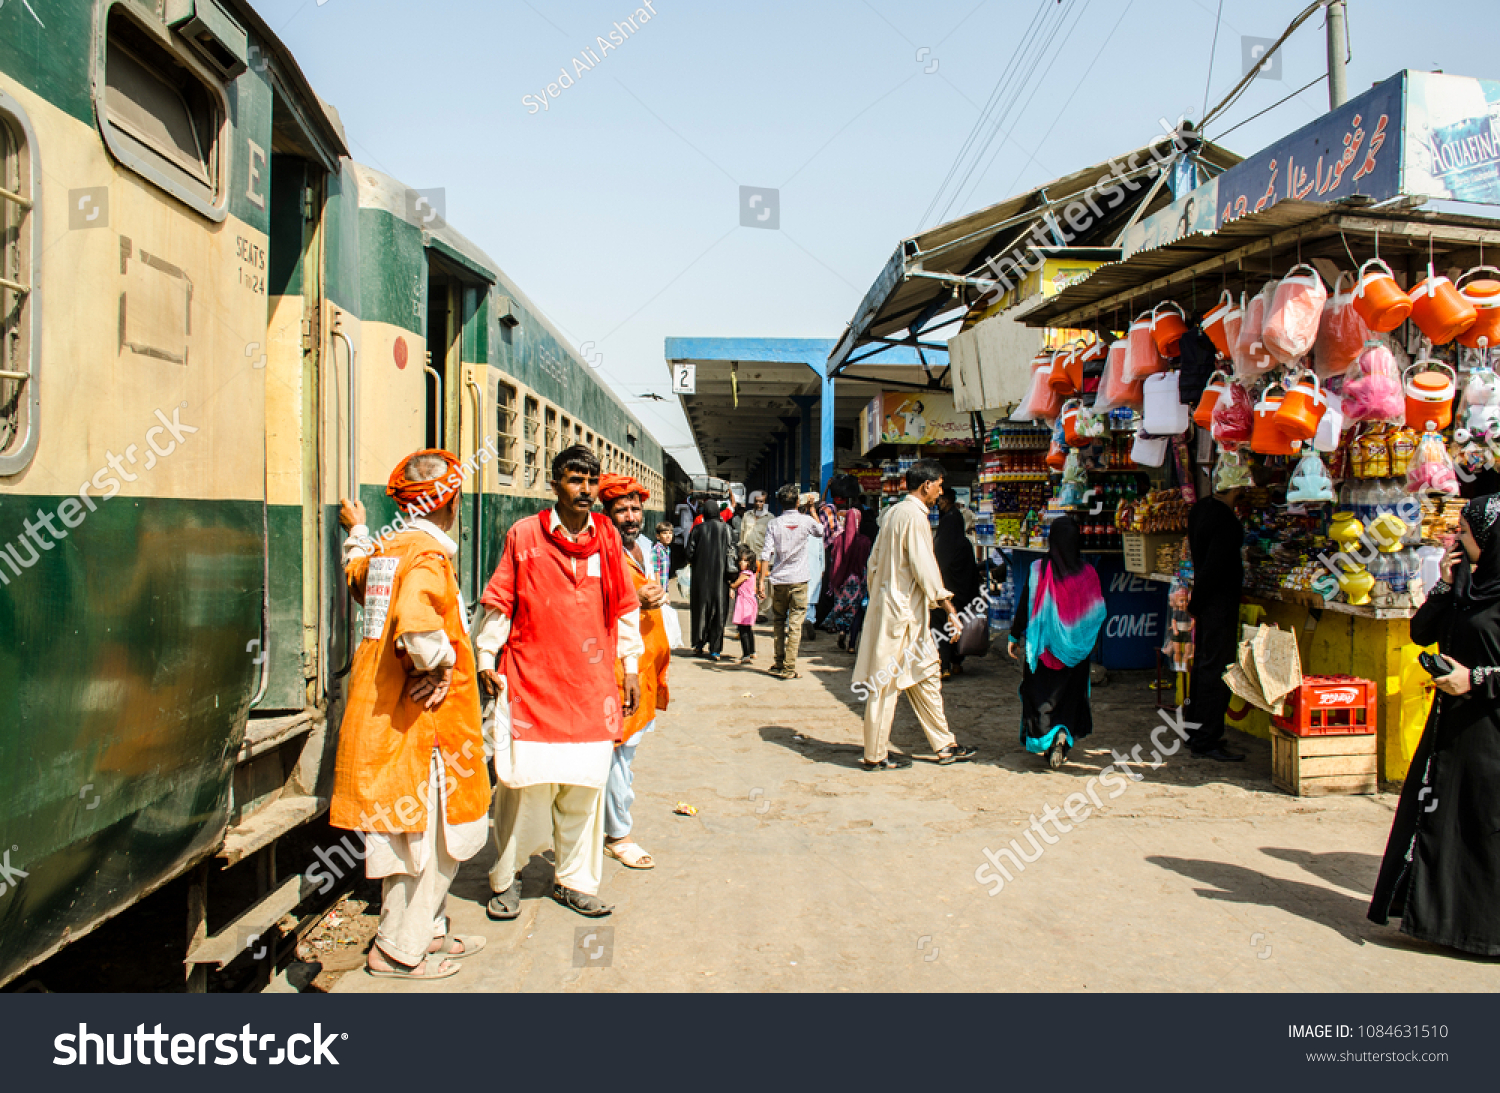 stock-photo-cantt-station-karachi-pakistan-october-porter-koli-at-the-karachi-cantt-railway-1084631510.jpg